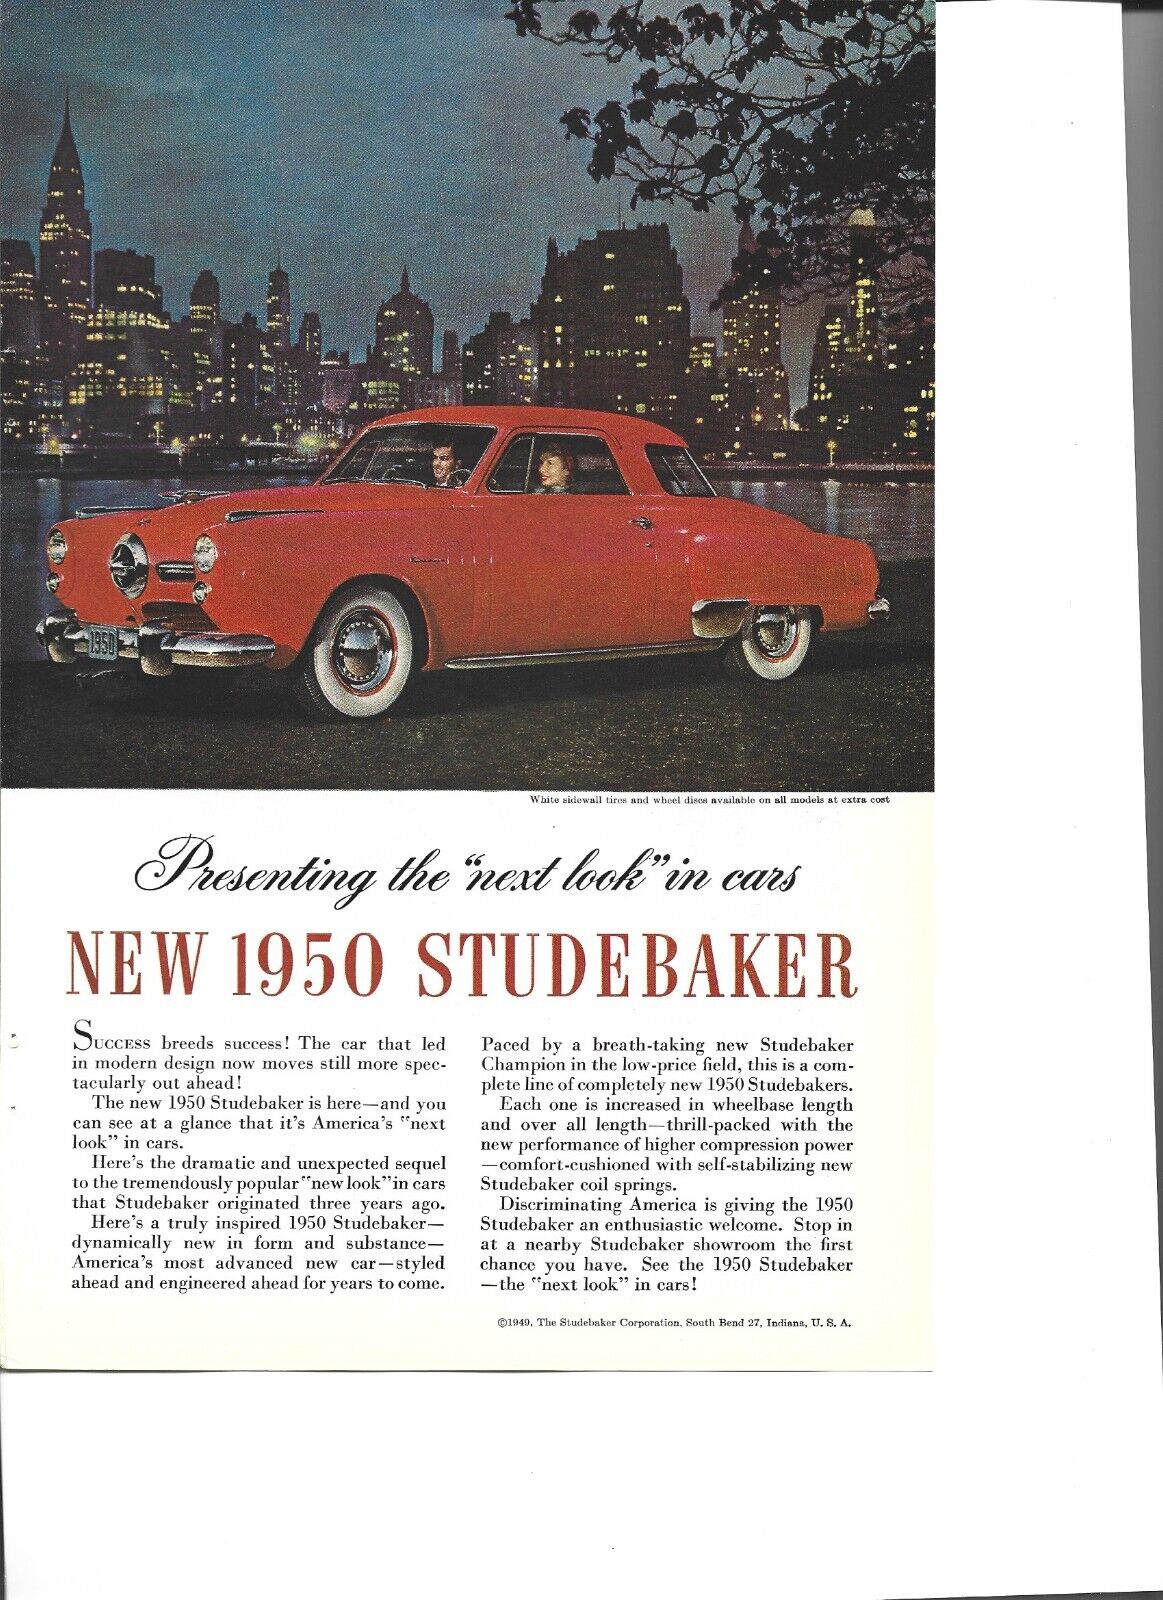 2 Original 1950 Studebaker vintage print ad (ads), 1 sedan and 1 coupe